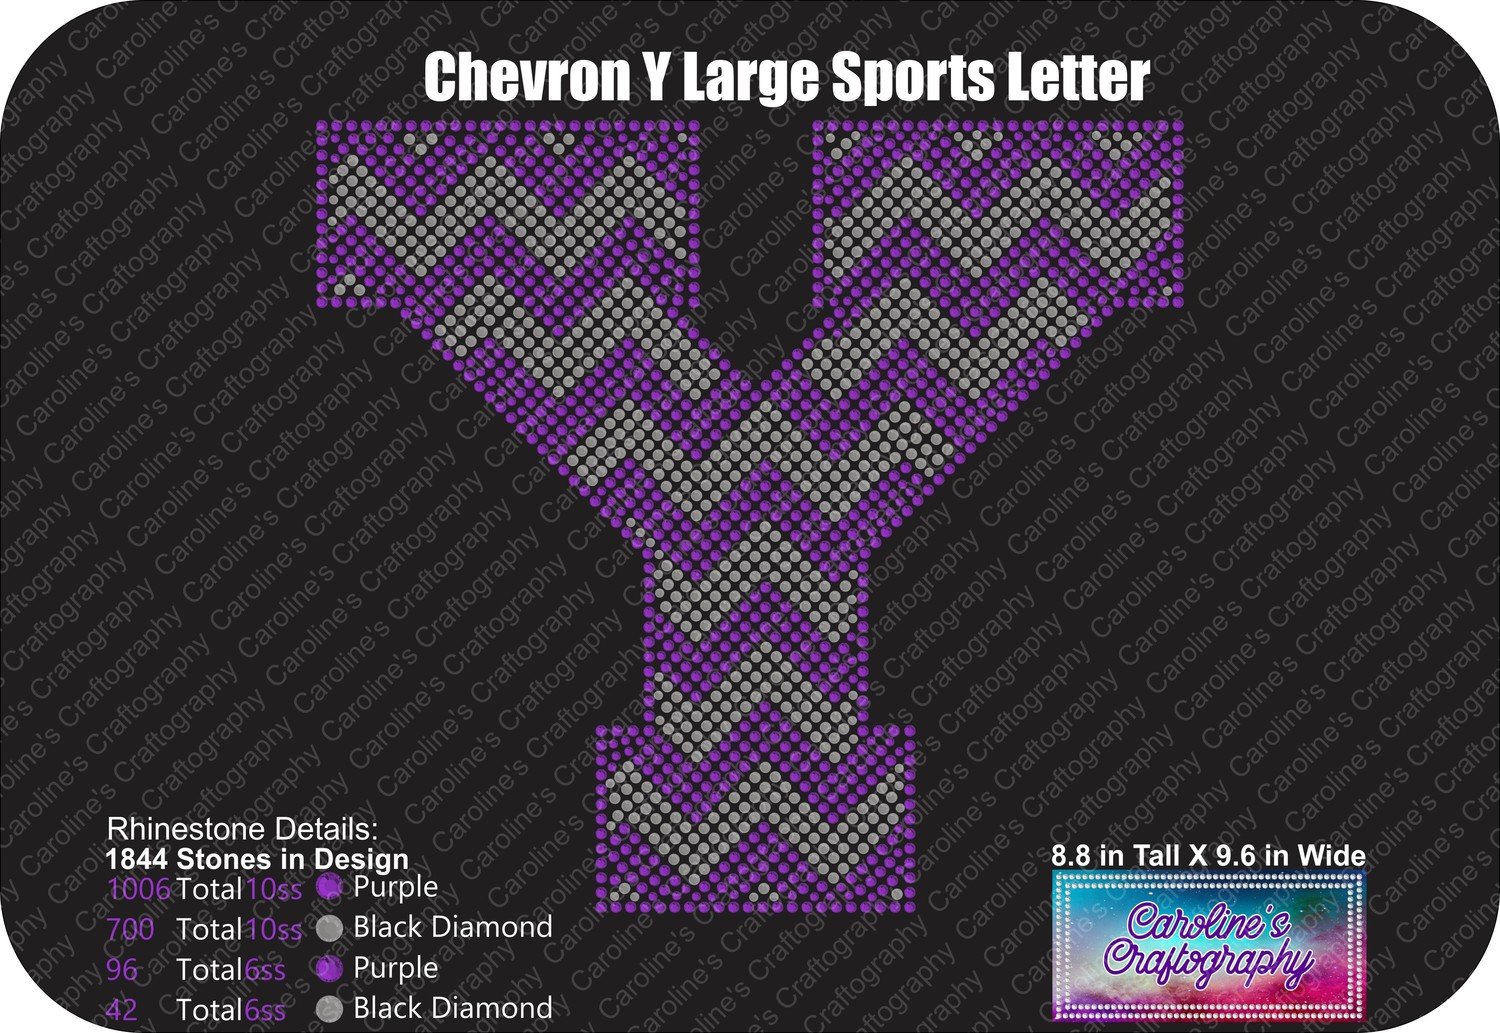 Y Chevron Large Sports Letter